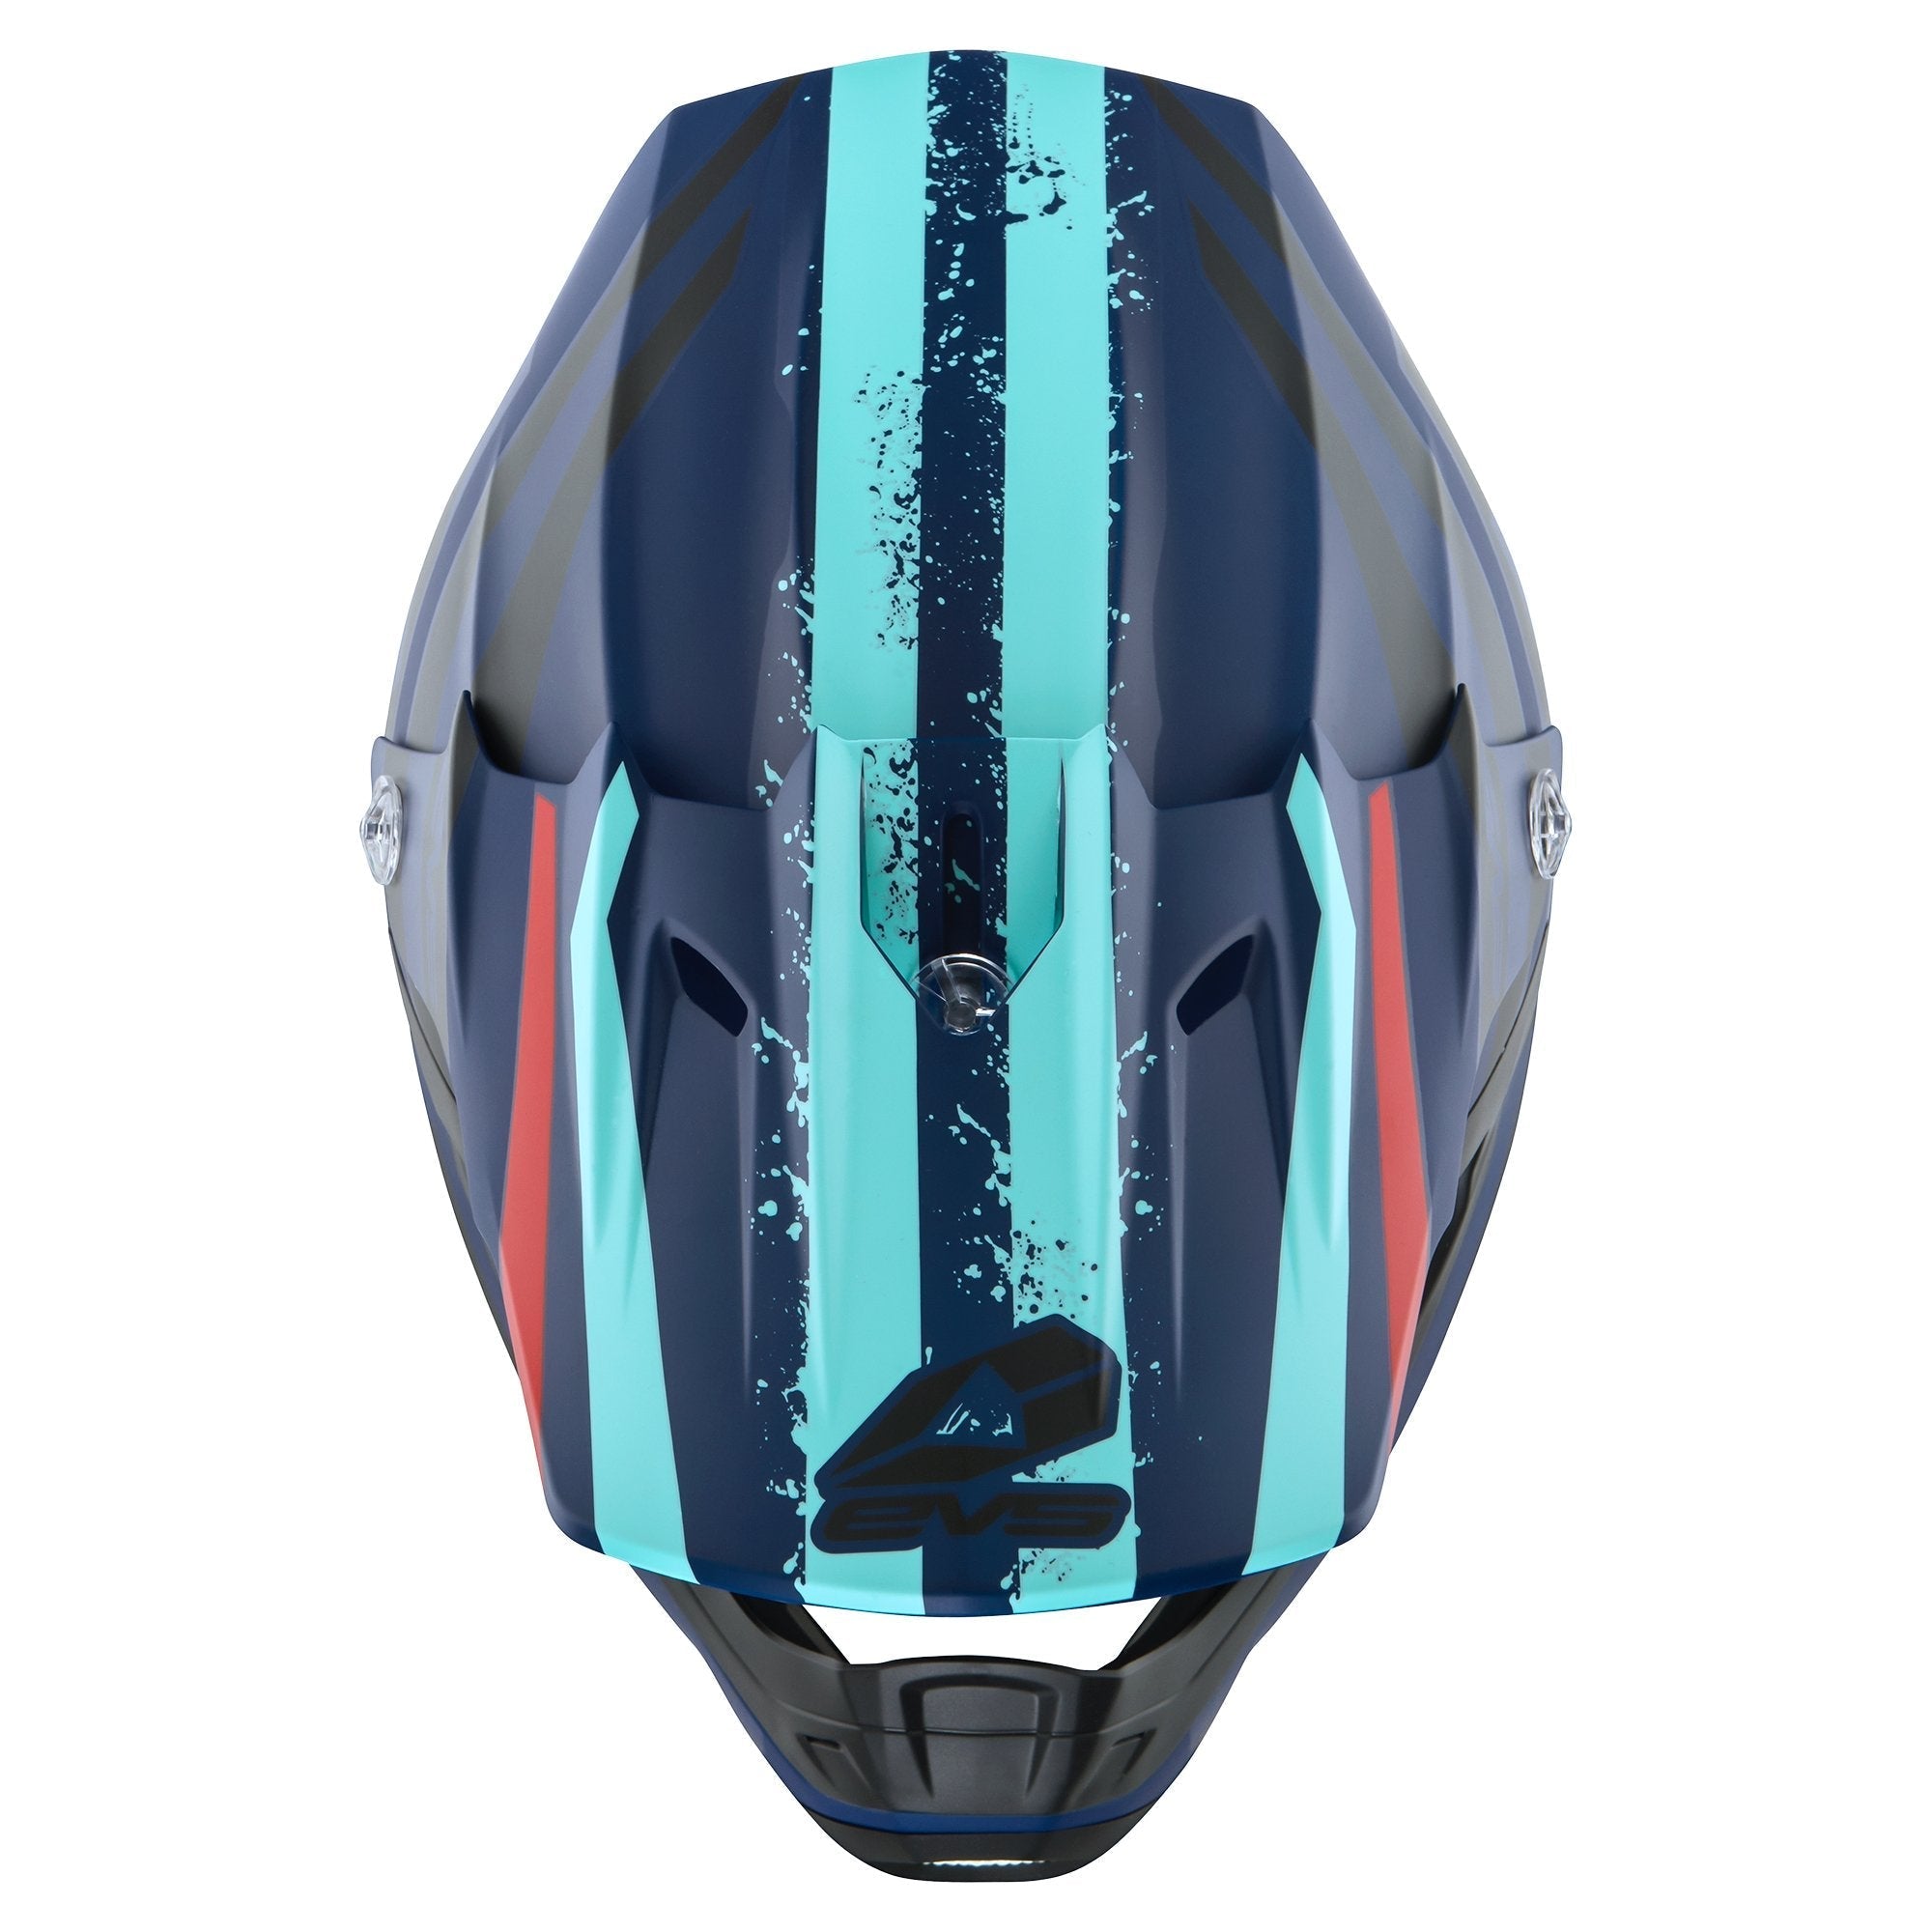 EVS T5 Off-Road Helmet - Grappler Dark Blue